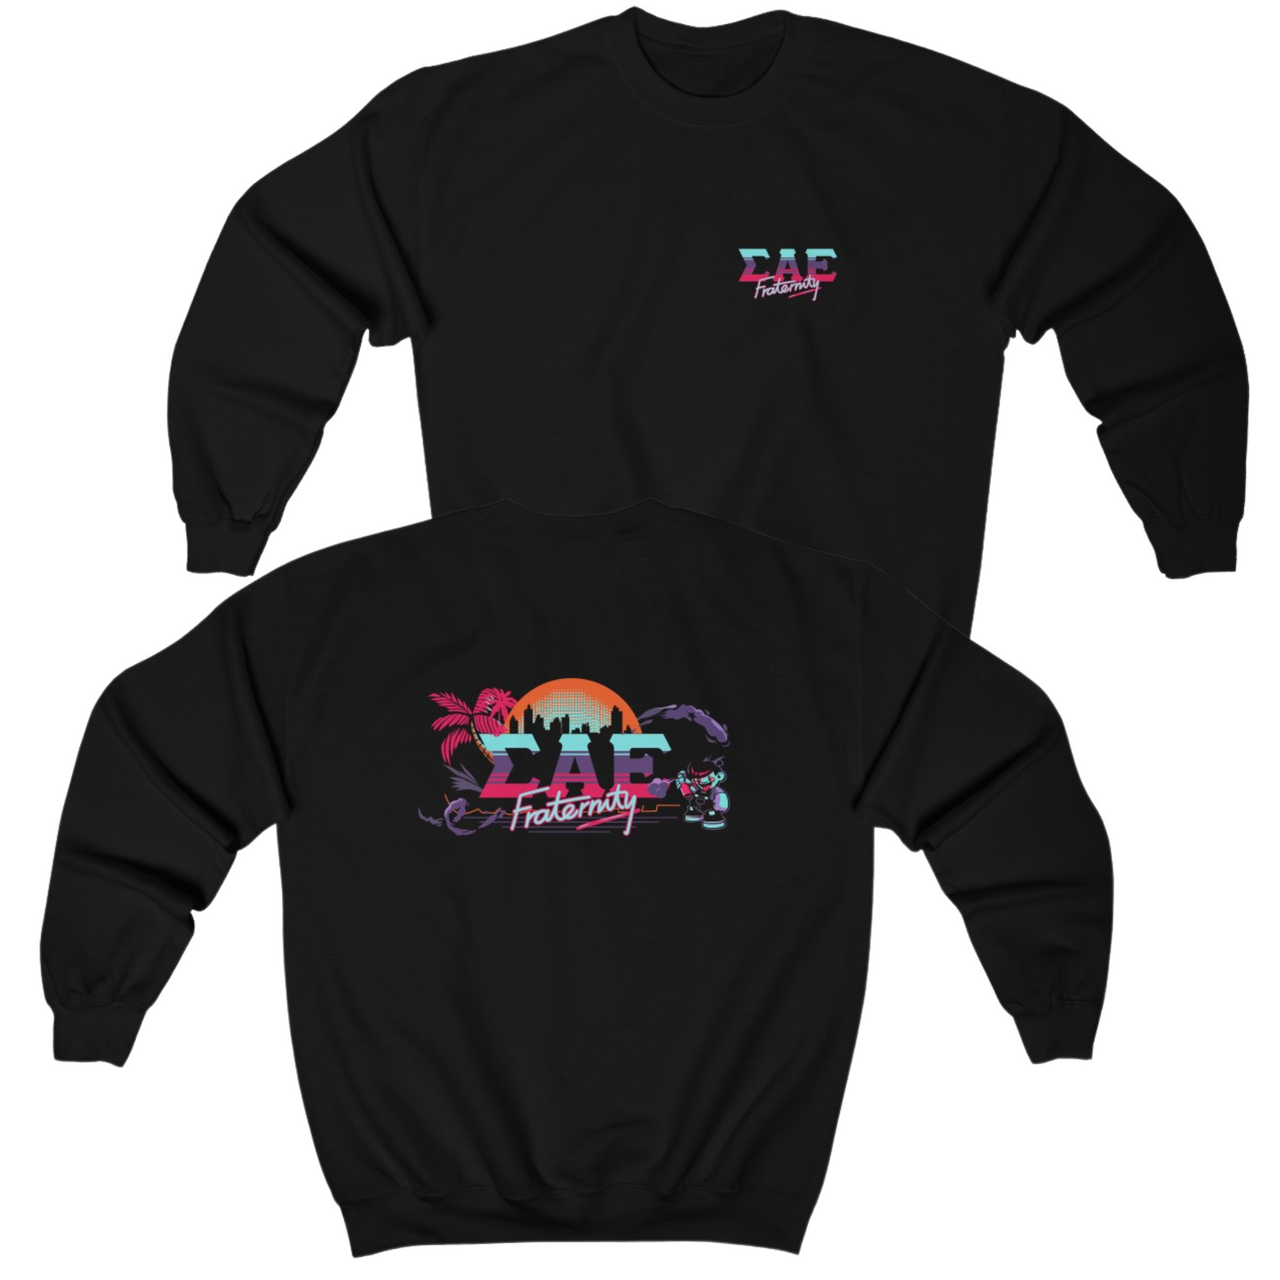 Black Sigma Alpha Epsilon Graphic Crewneck Sweatshirt | Jump Street | Sigma Alpha Epsilon Clothing and Merchandise